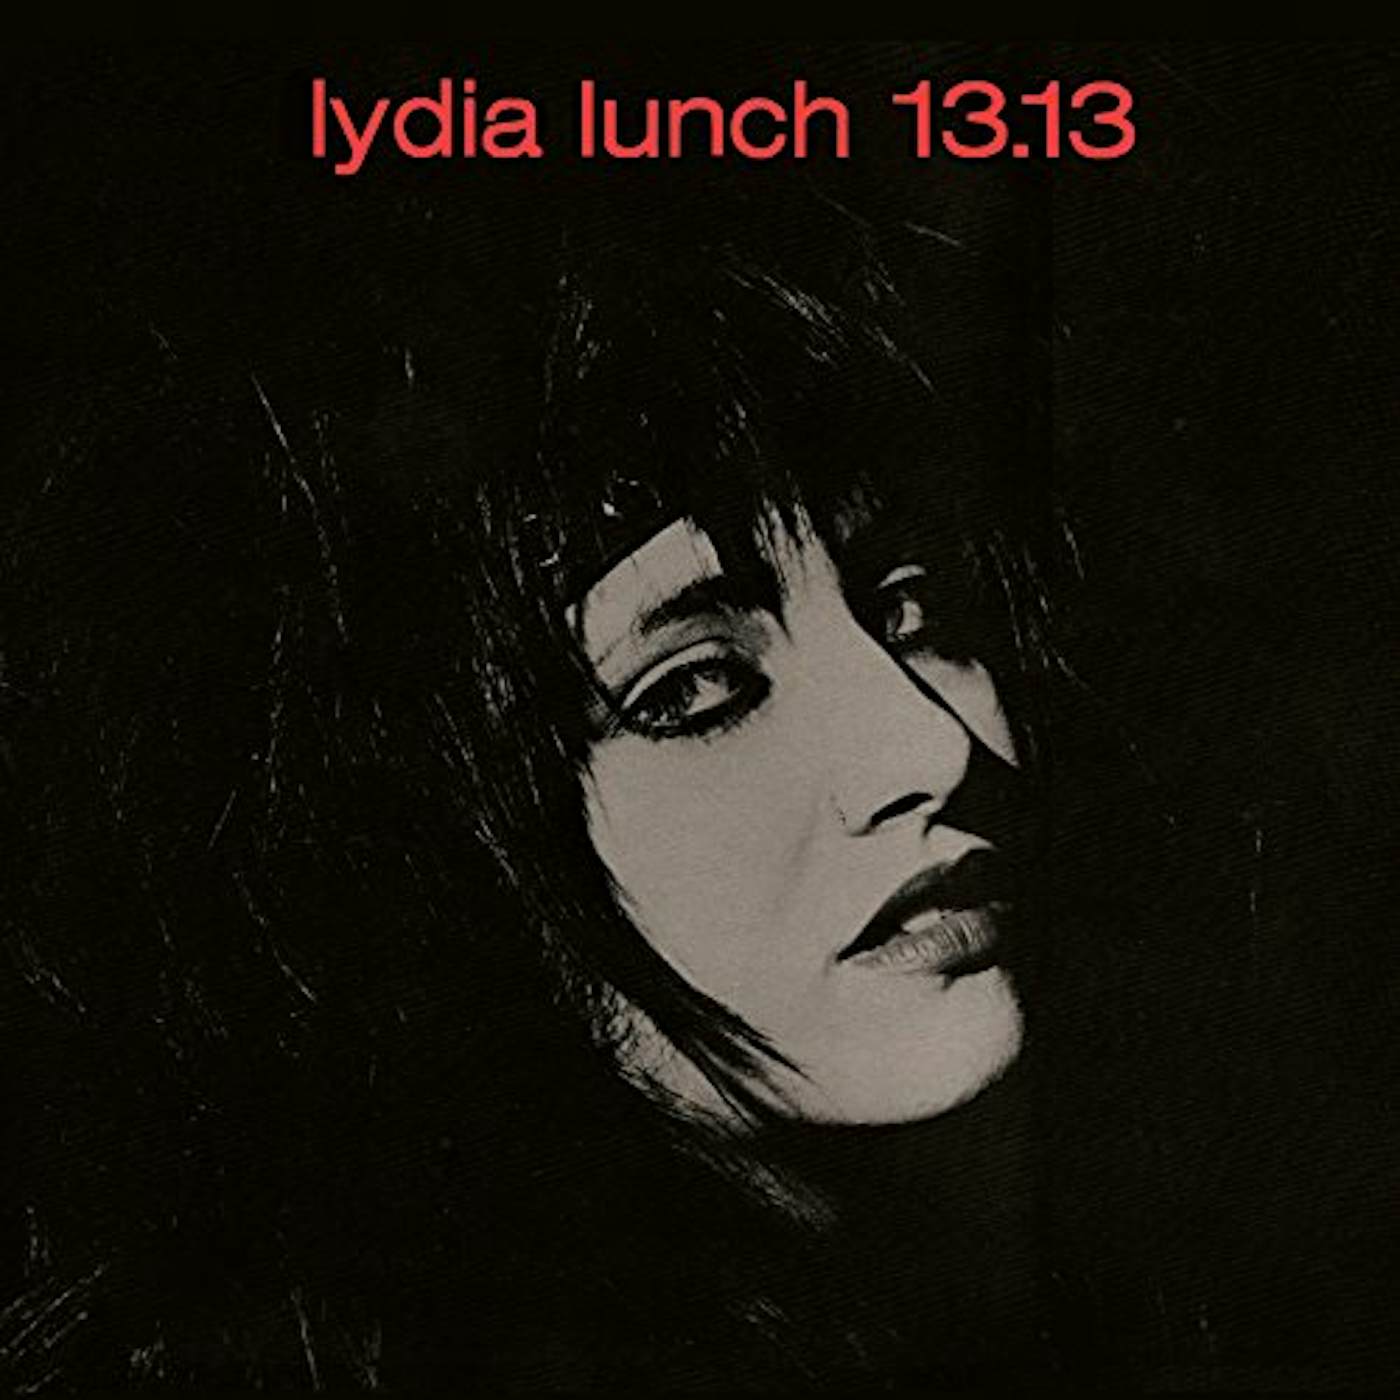 Lydia Lunch 67080 13.13 Vinyl Record